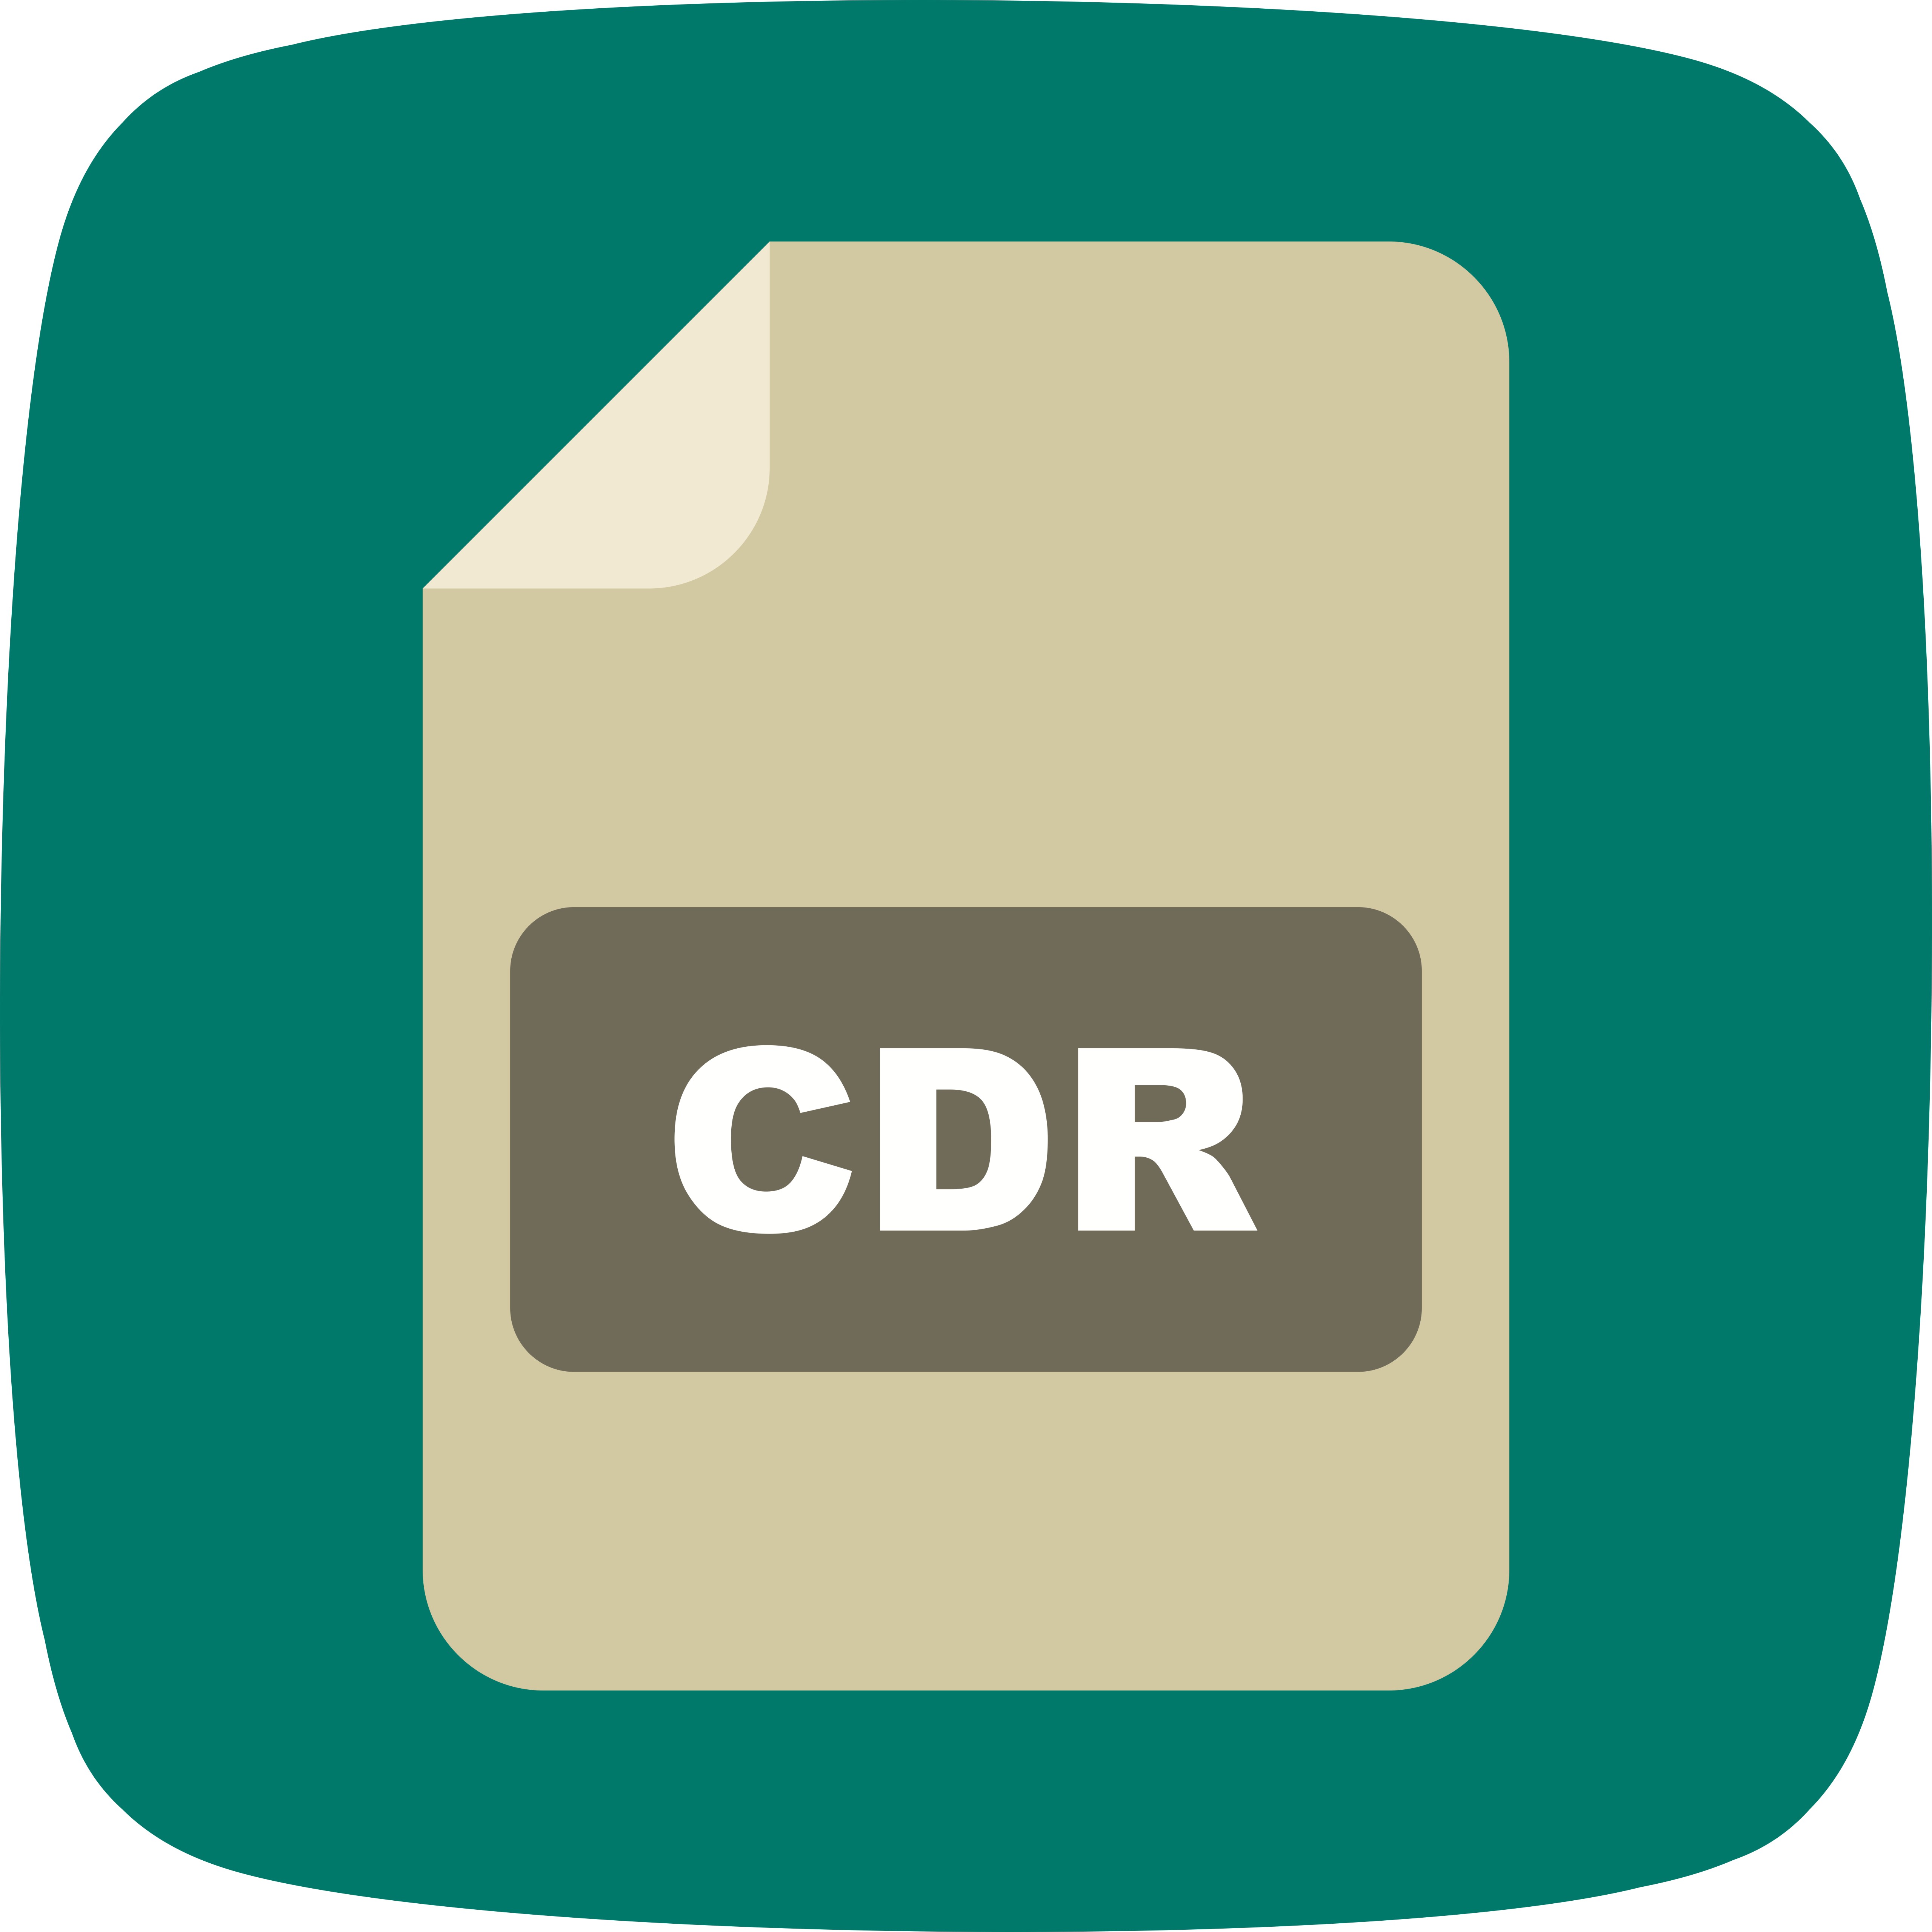  Cdr  Files Free  Vector Art 20 Free  Downloads 